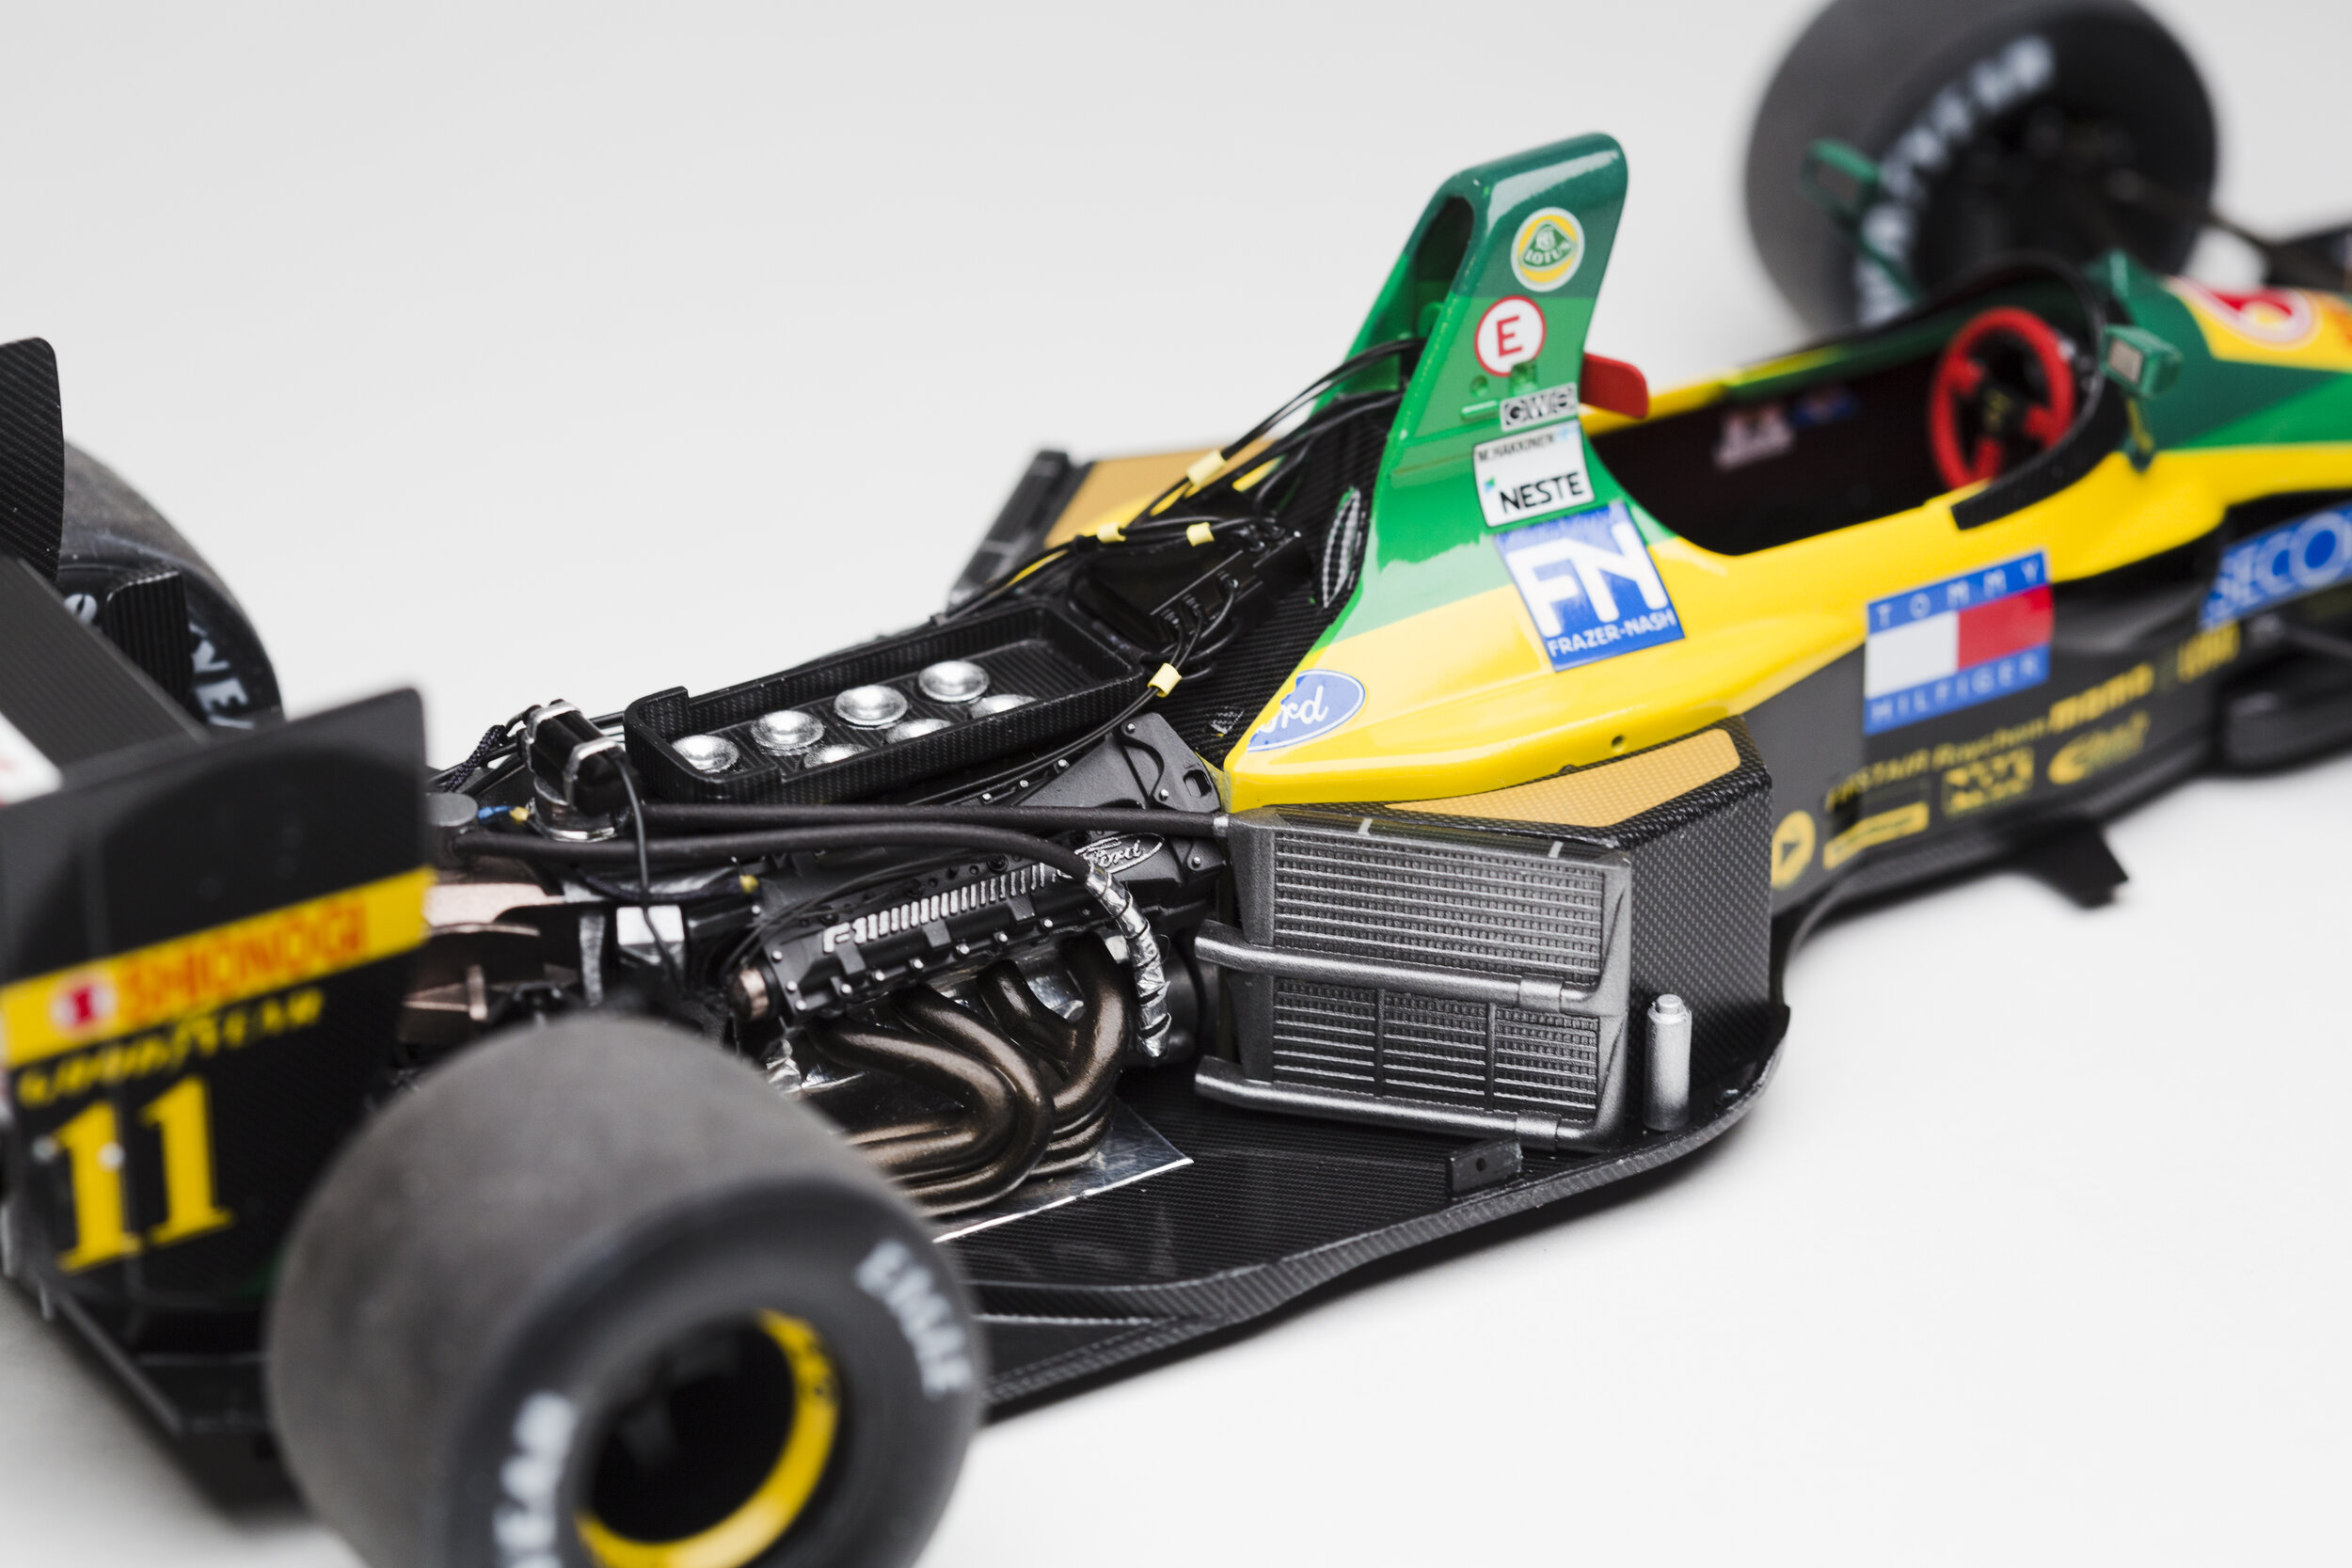 1992 Lotus 102D | Tamiya 1/20 — F1 Modelling